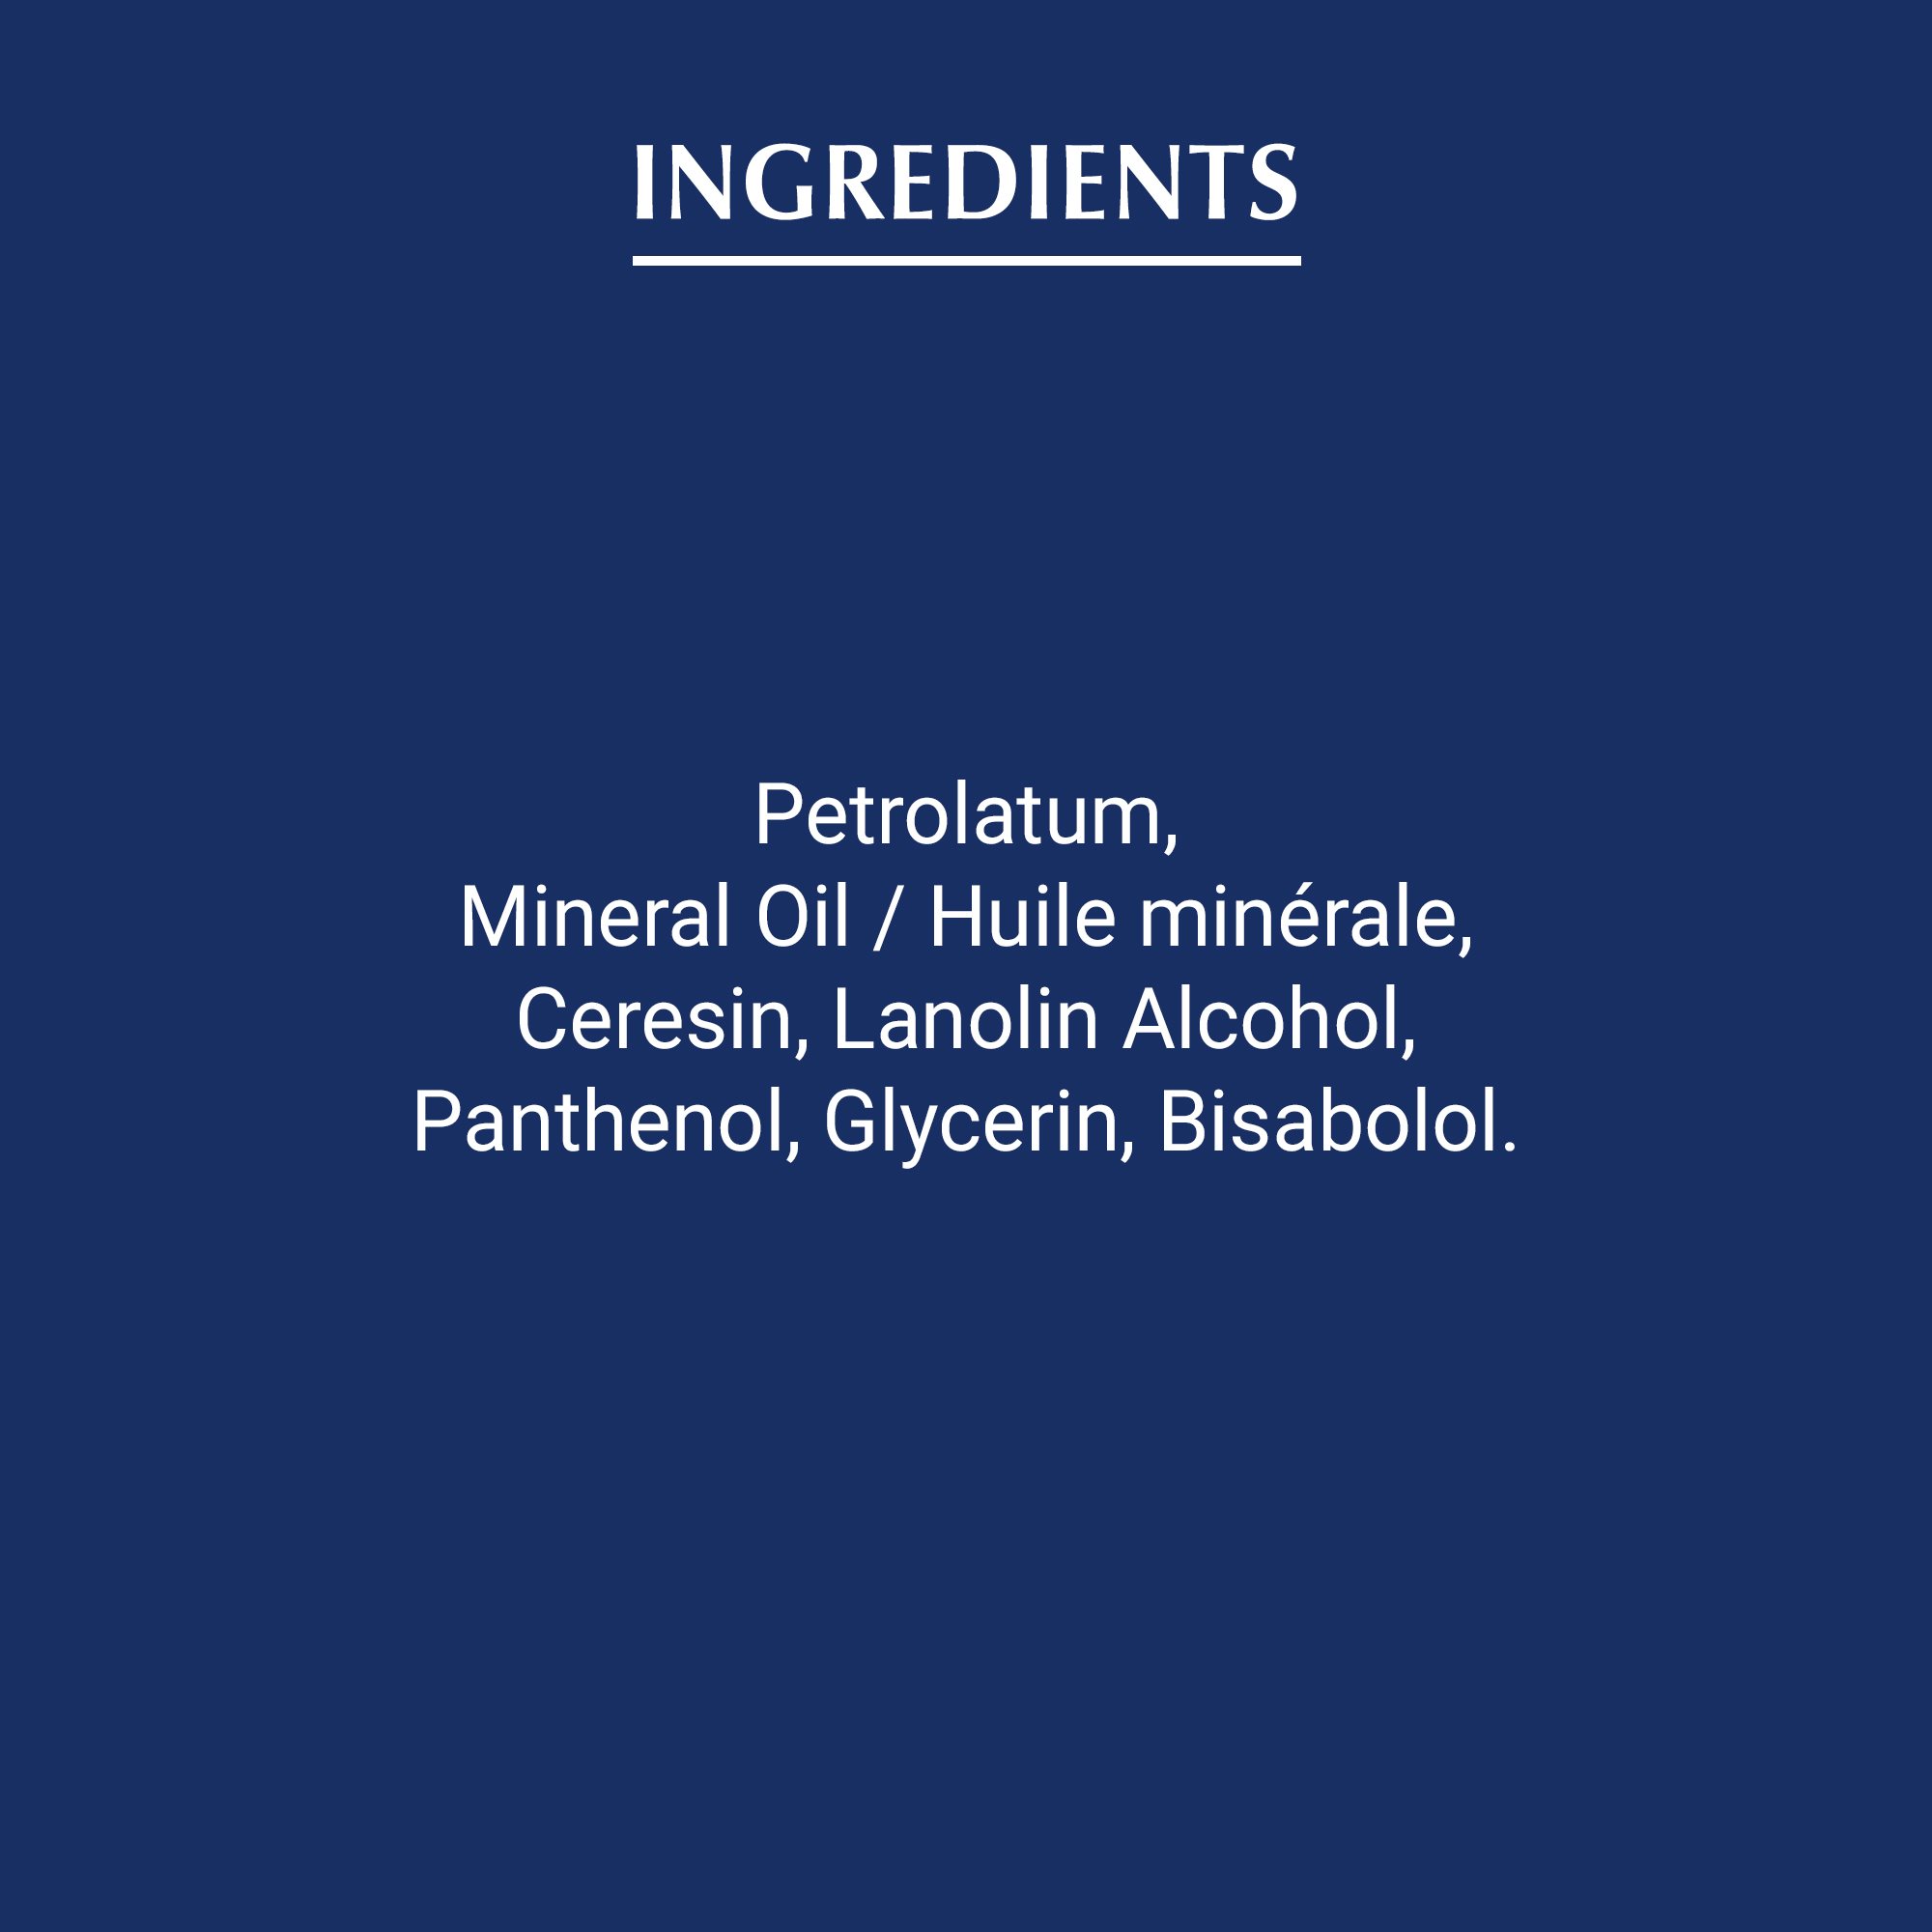 Eucerin Aquaphor ingredient list